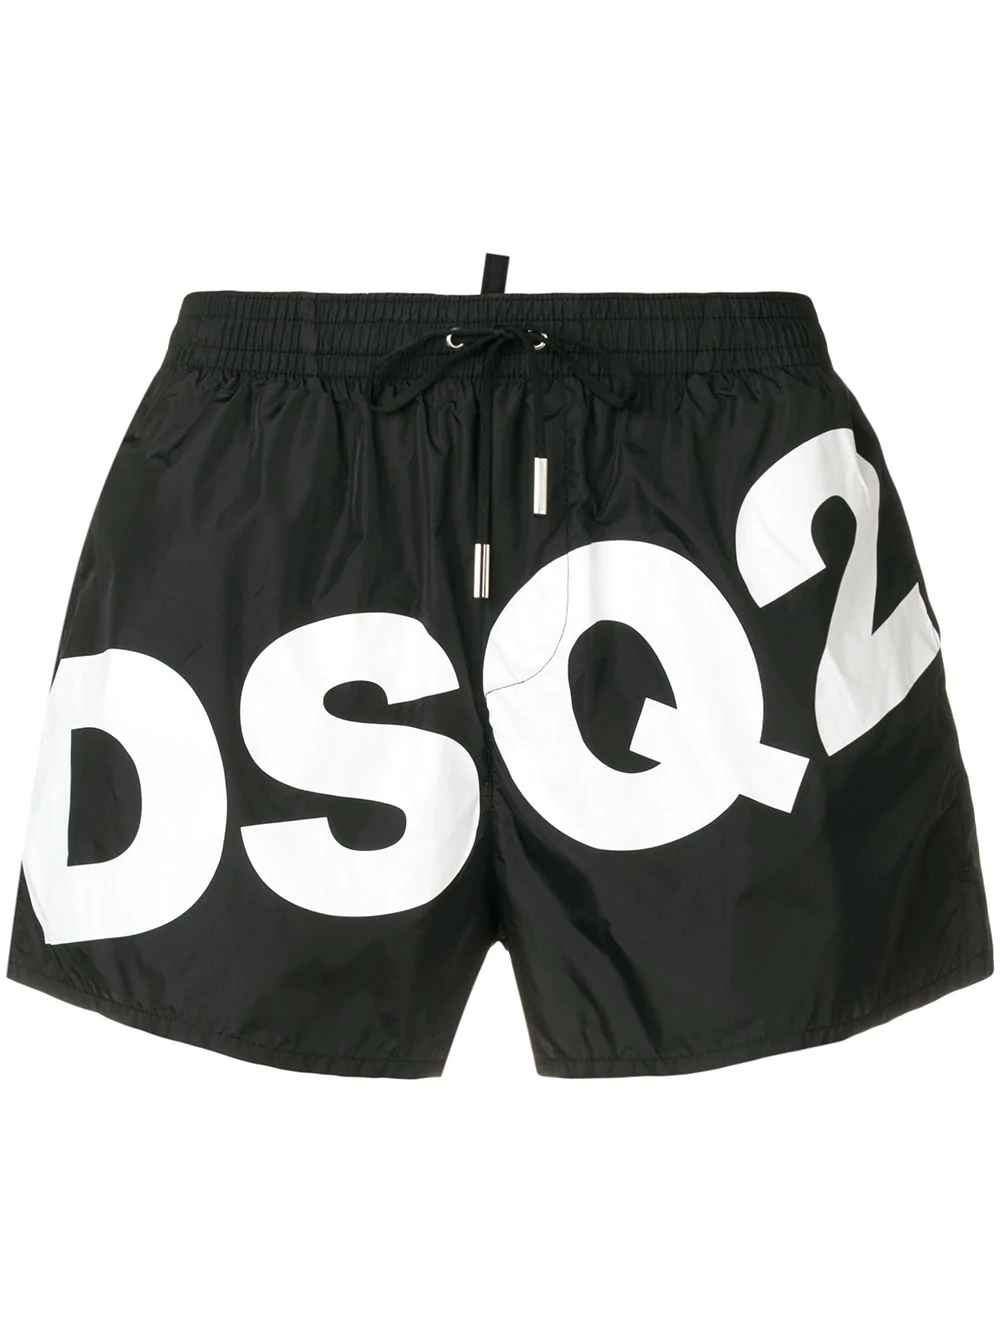 dsquared2 swim shorts sale